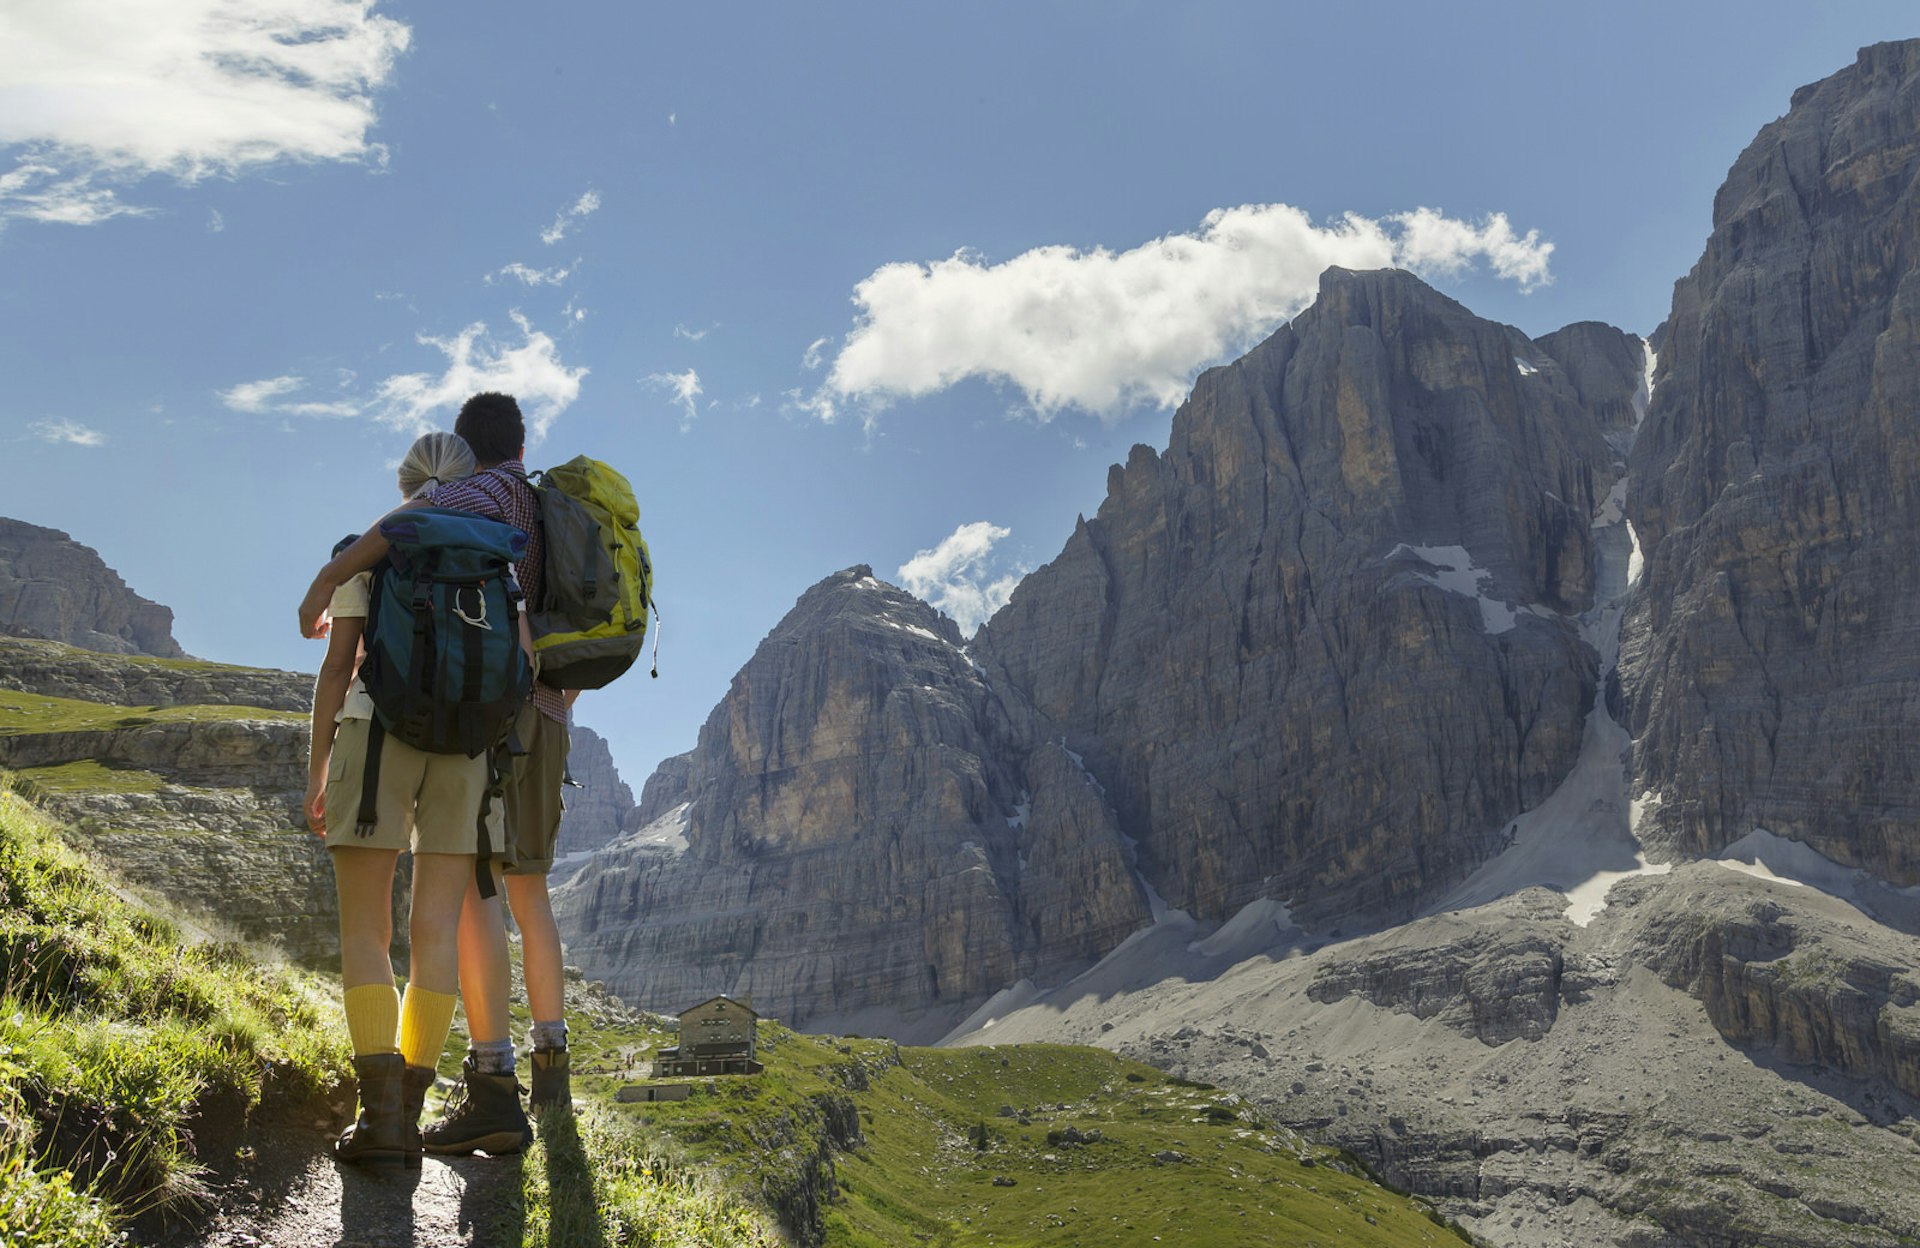 A hiking couple gazes towards a dramatic rocky outcrop